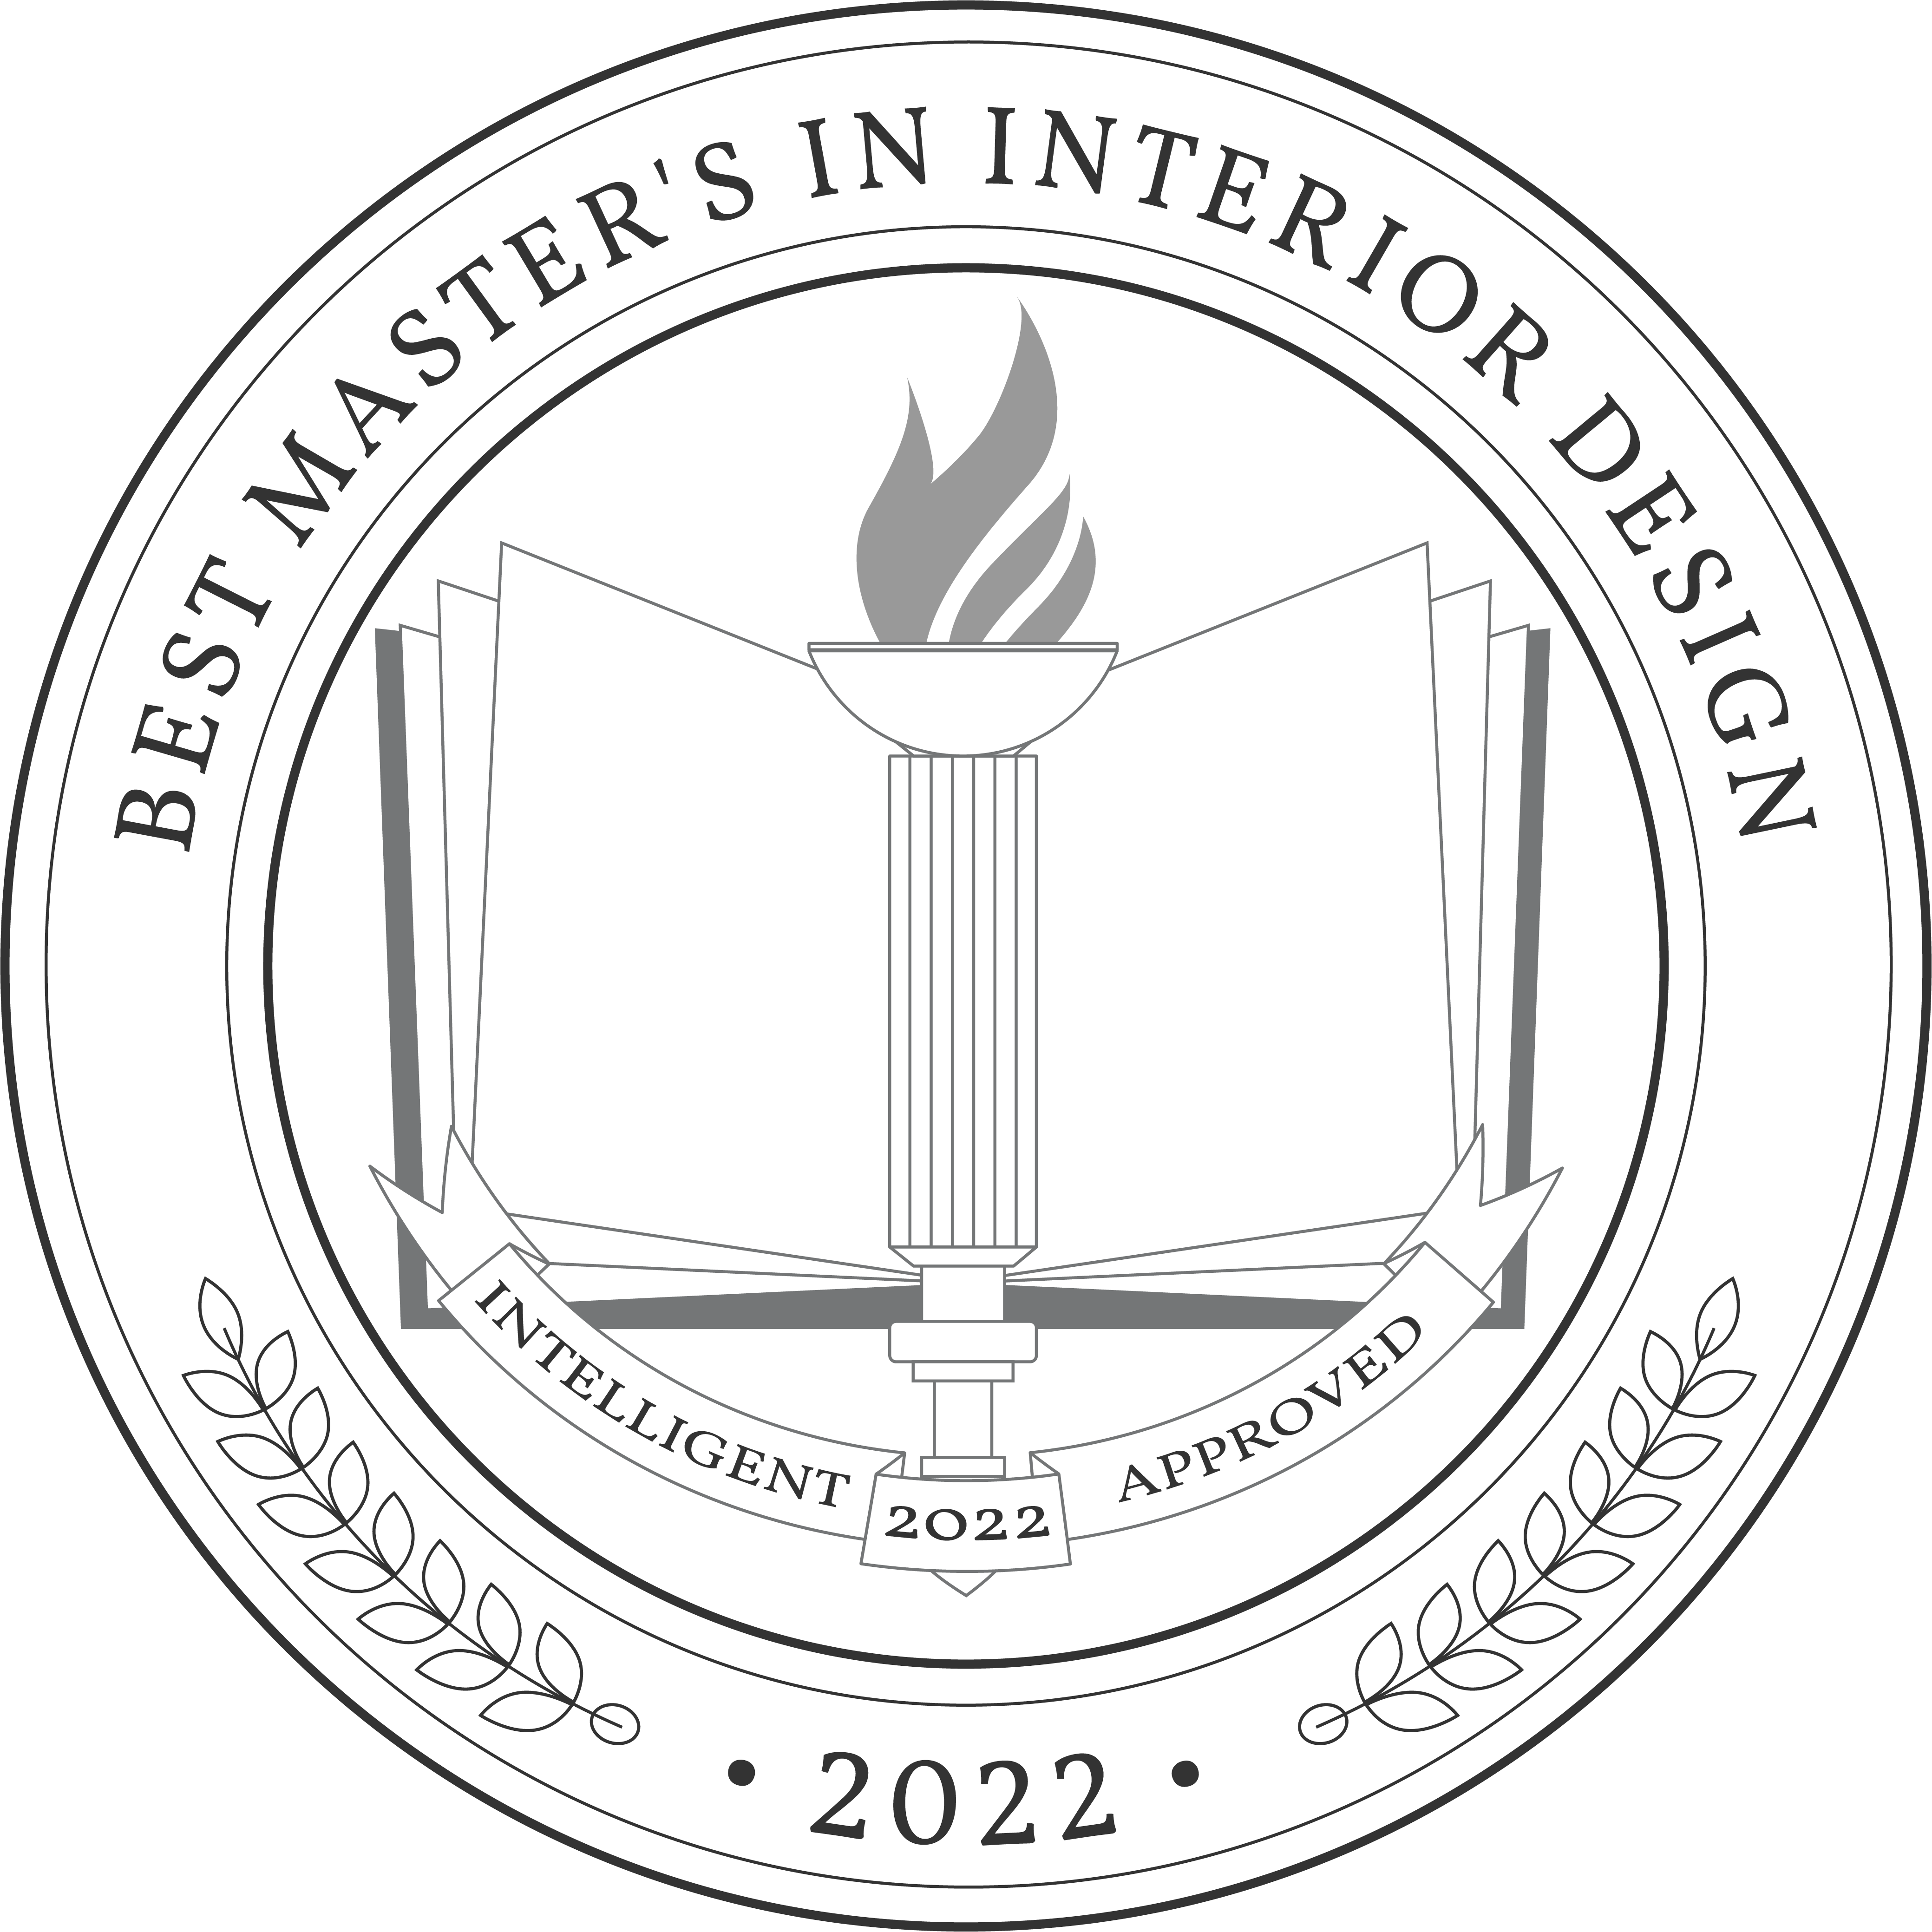 Best Master's in Interior Design Degree Programs